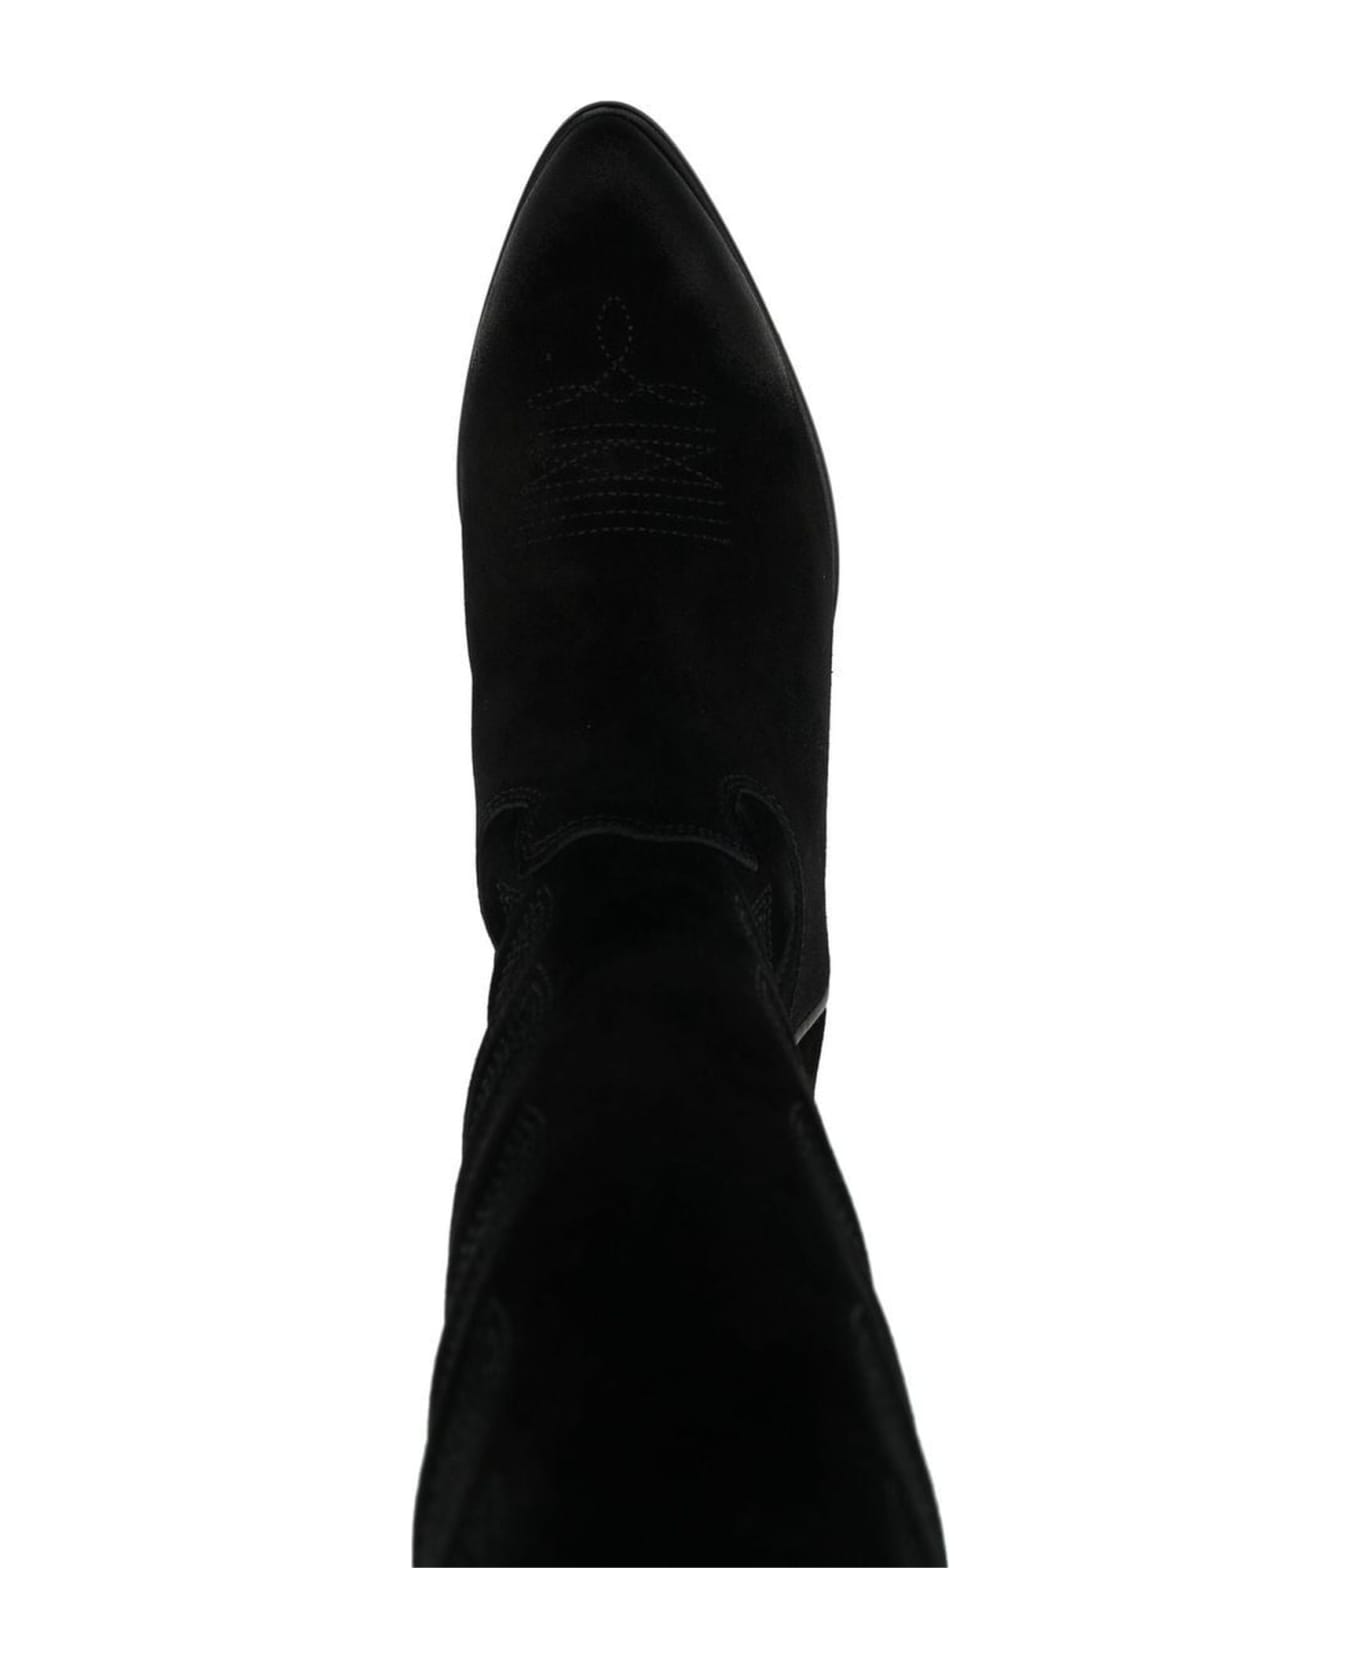 Ash Black Calf Leather Heaven Boots - Black